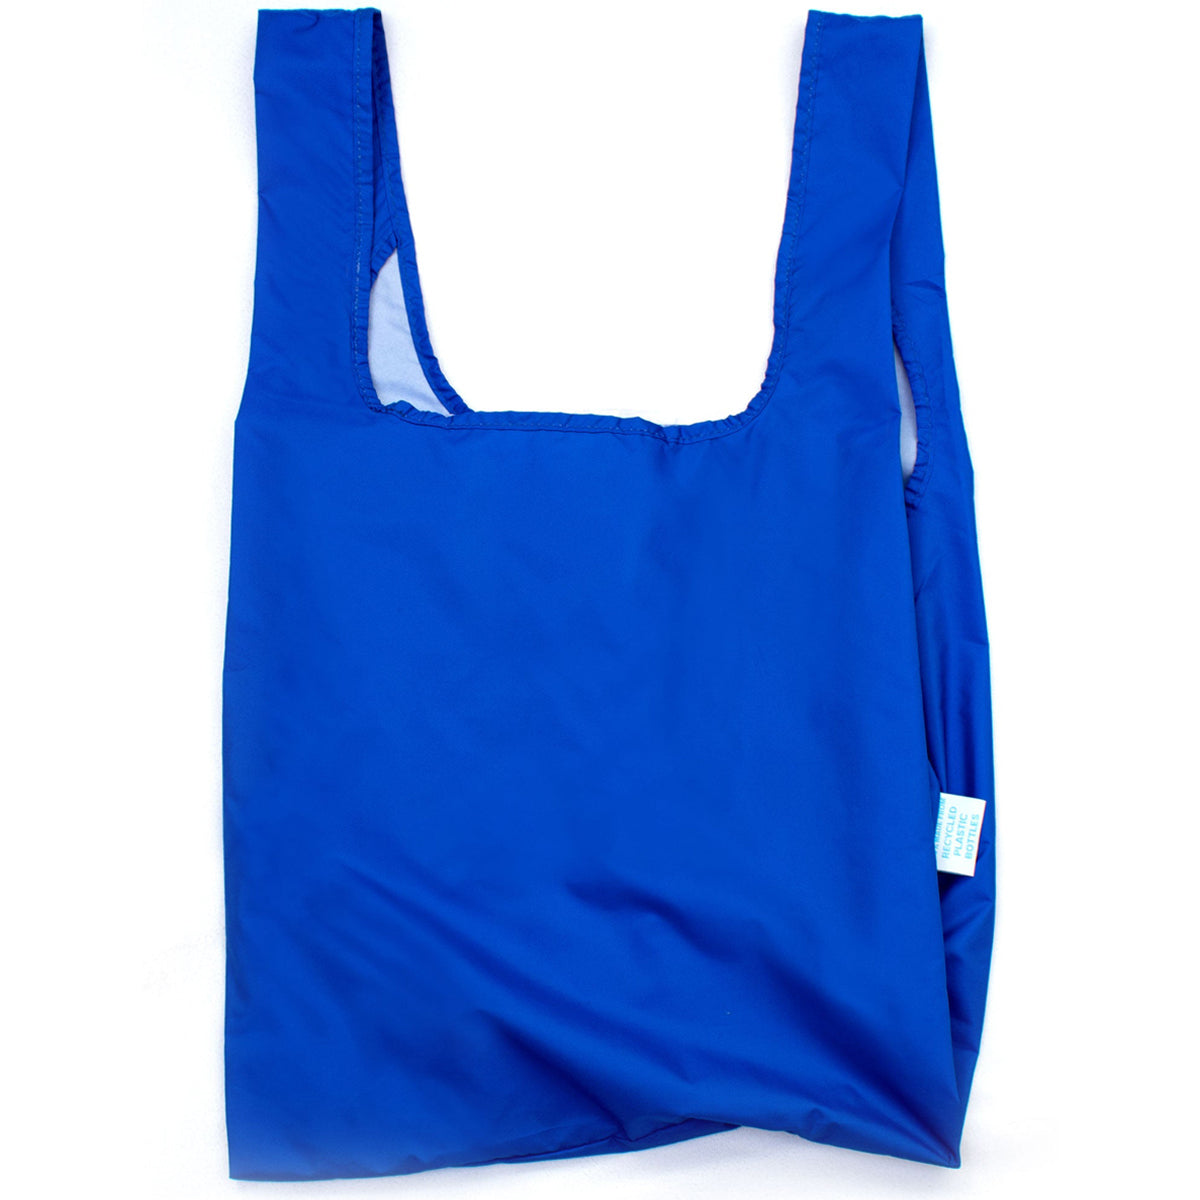 Kind Bag Reusable Foldaway Tote - Sapphire Blue